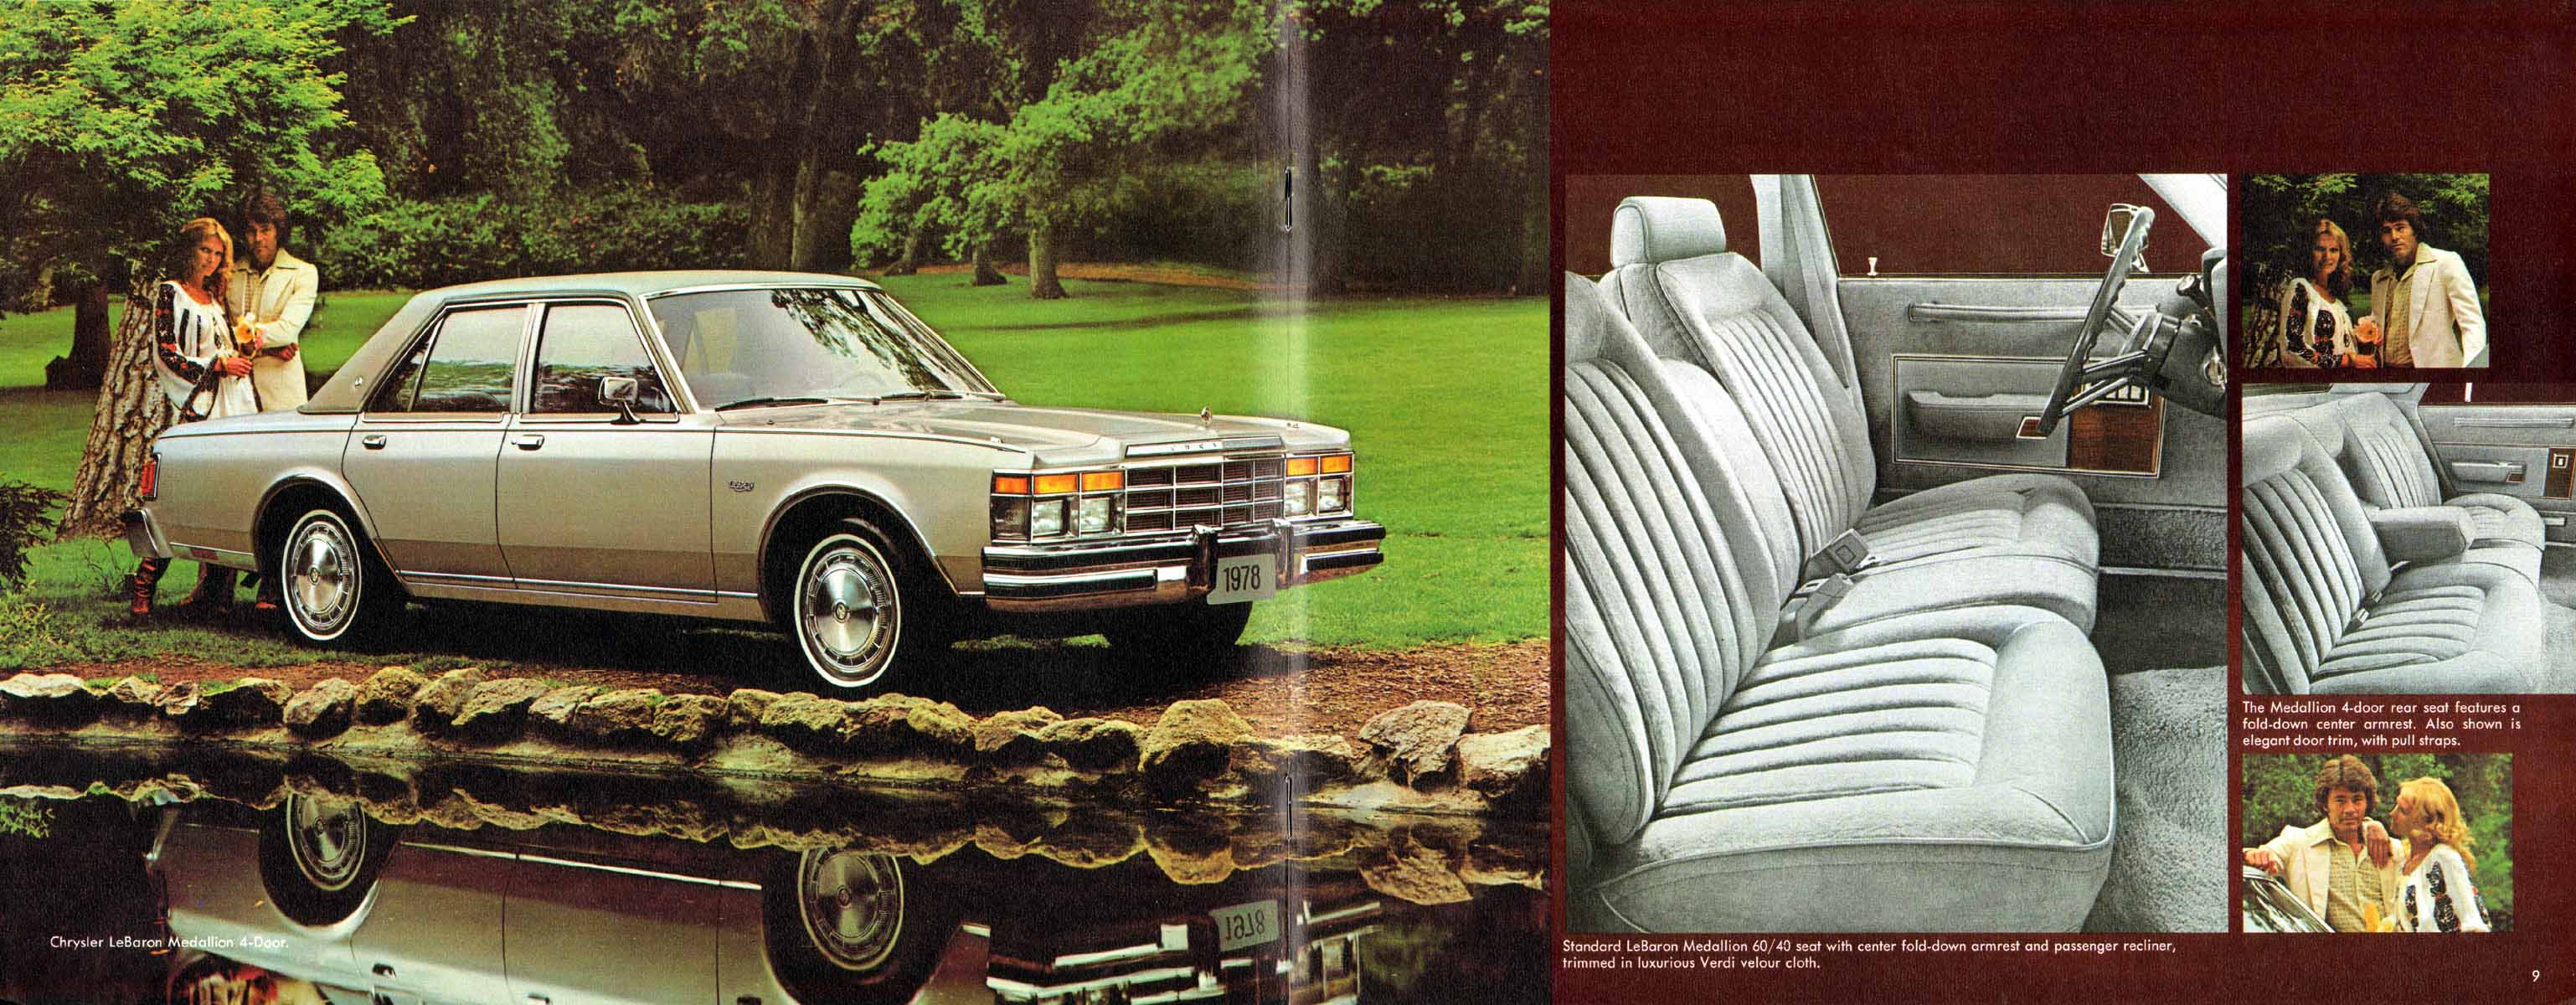 1978 Chrysler LeBaron-08-09